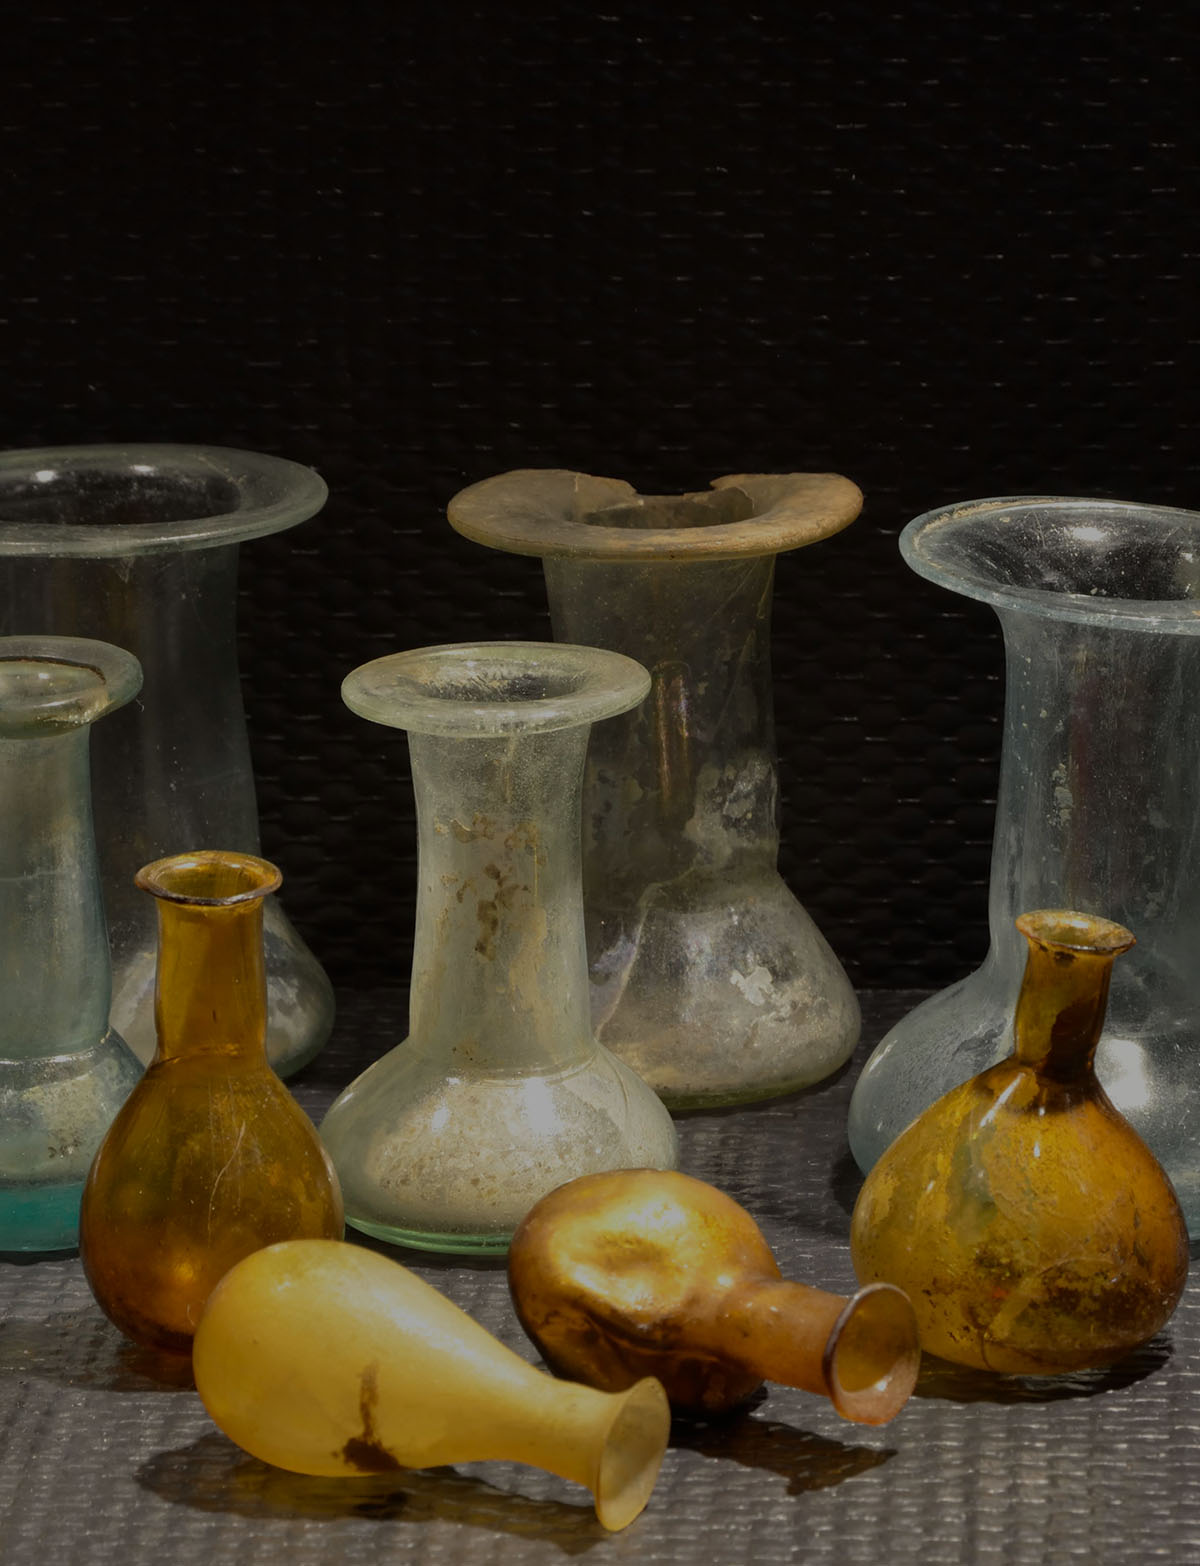 Balsambehälter aus Glas - Francesco di Toppo
Sammlung di Toppo